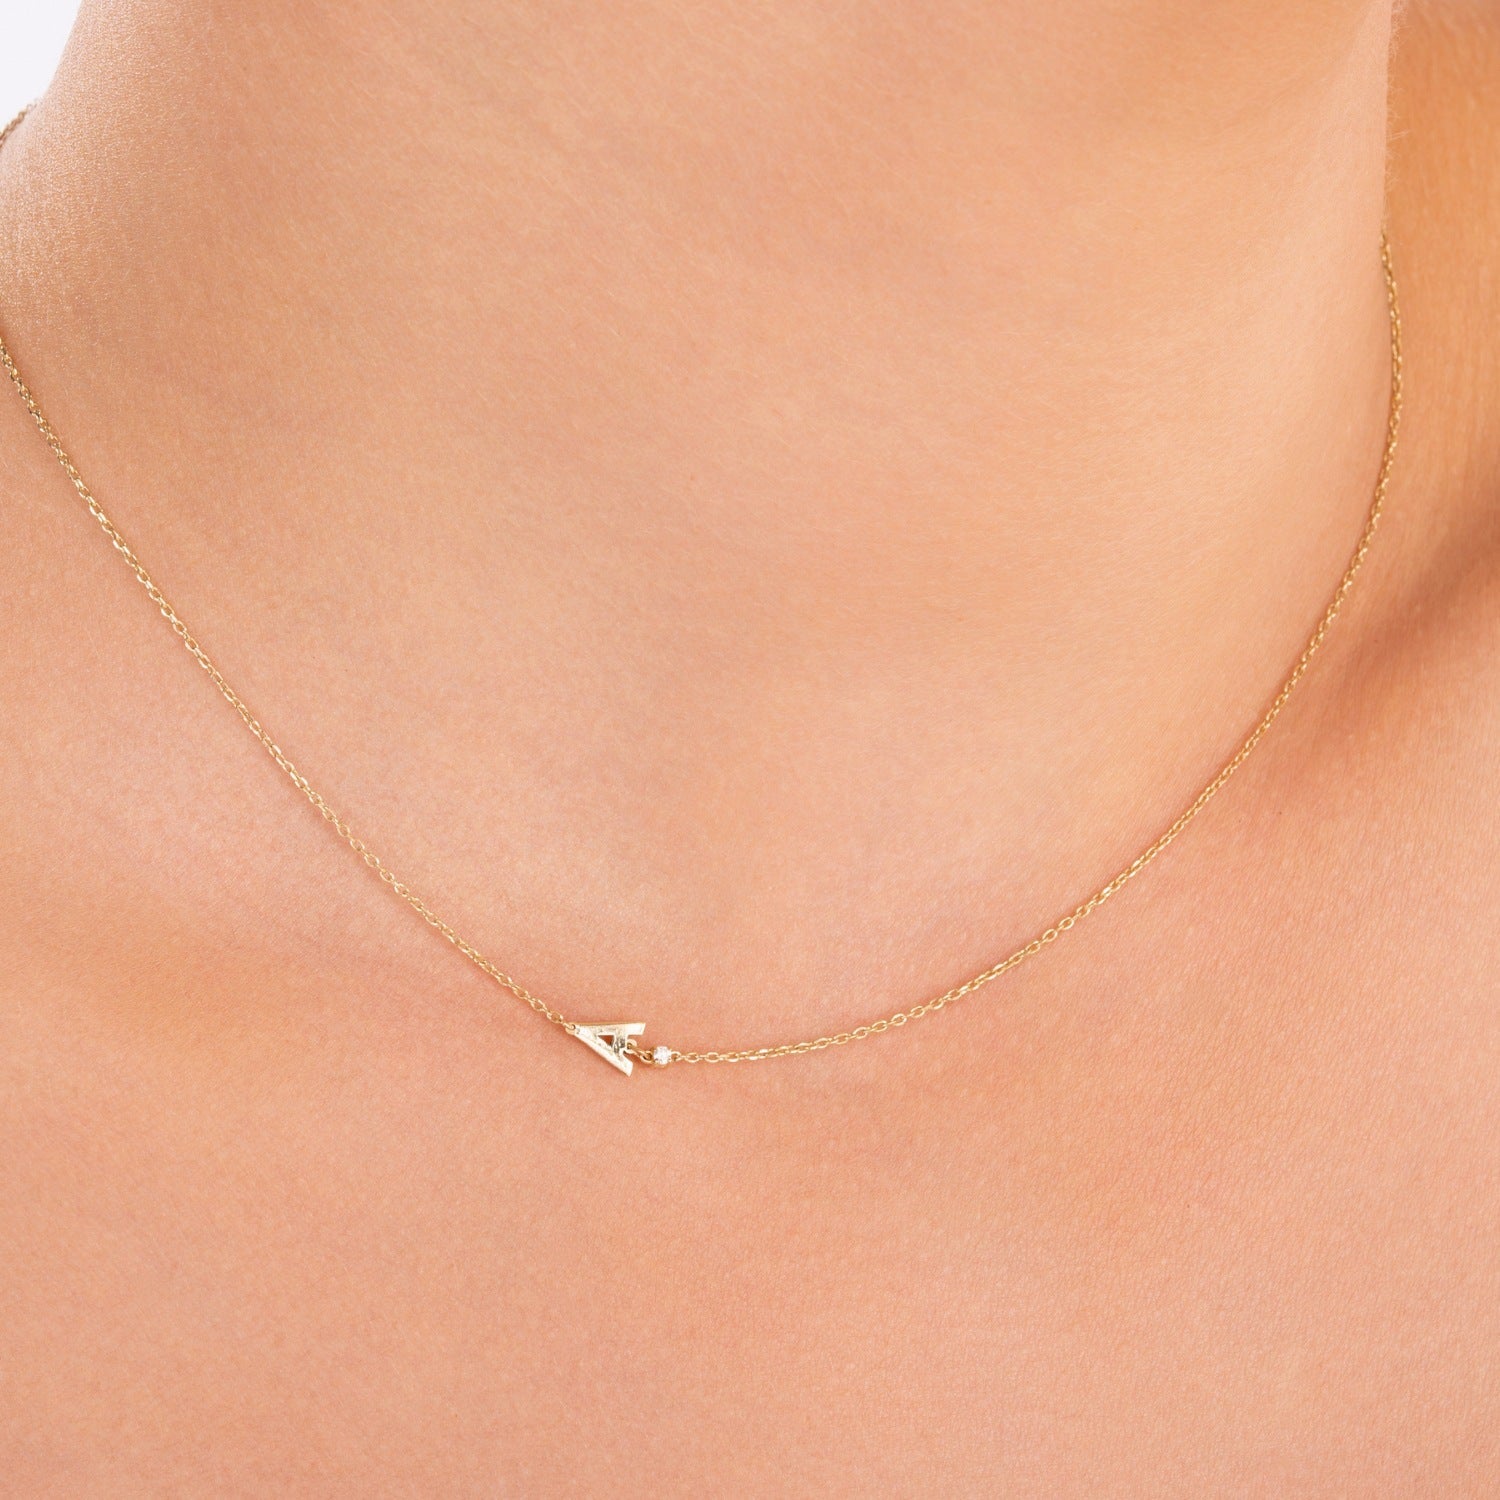 Sideways Initial P Necklace with Diamond